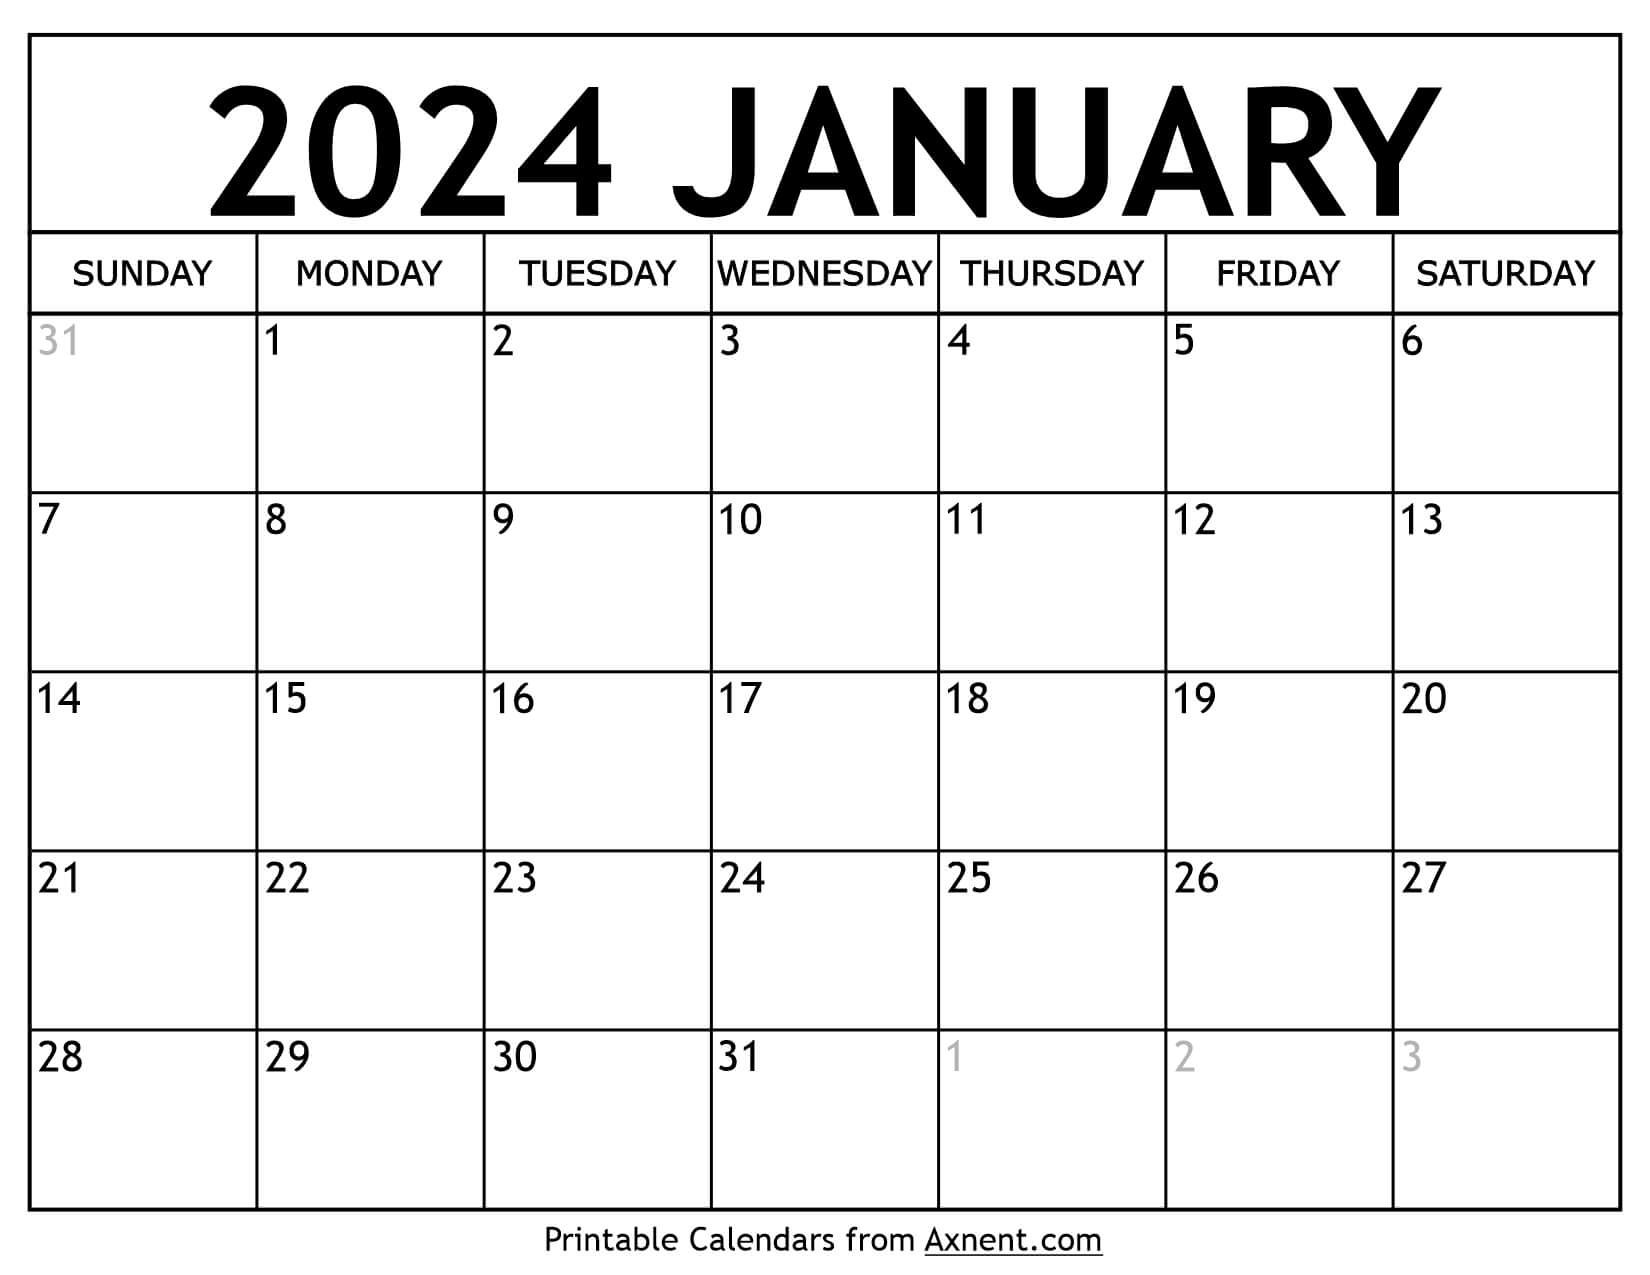 Printable January 2024 Calendar Template - Print Now for 2024 January Calendar Printable Free